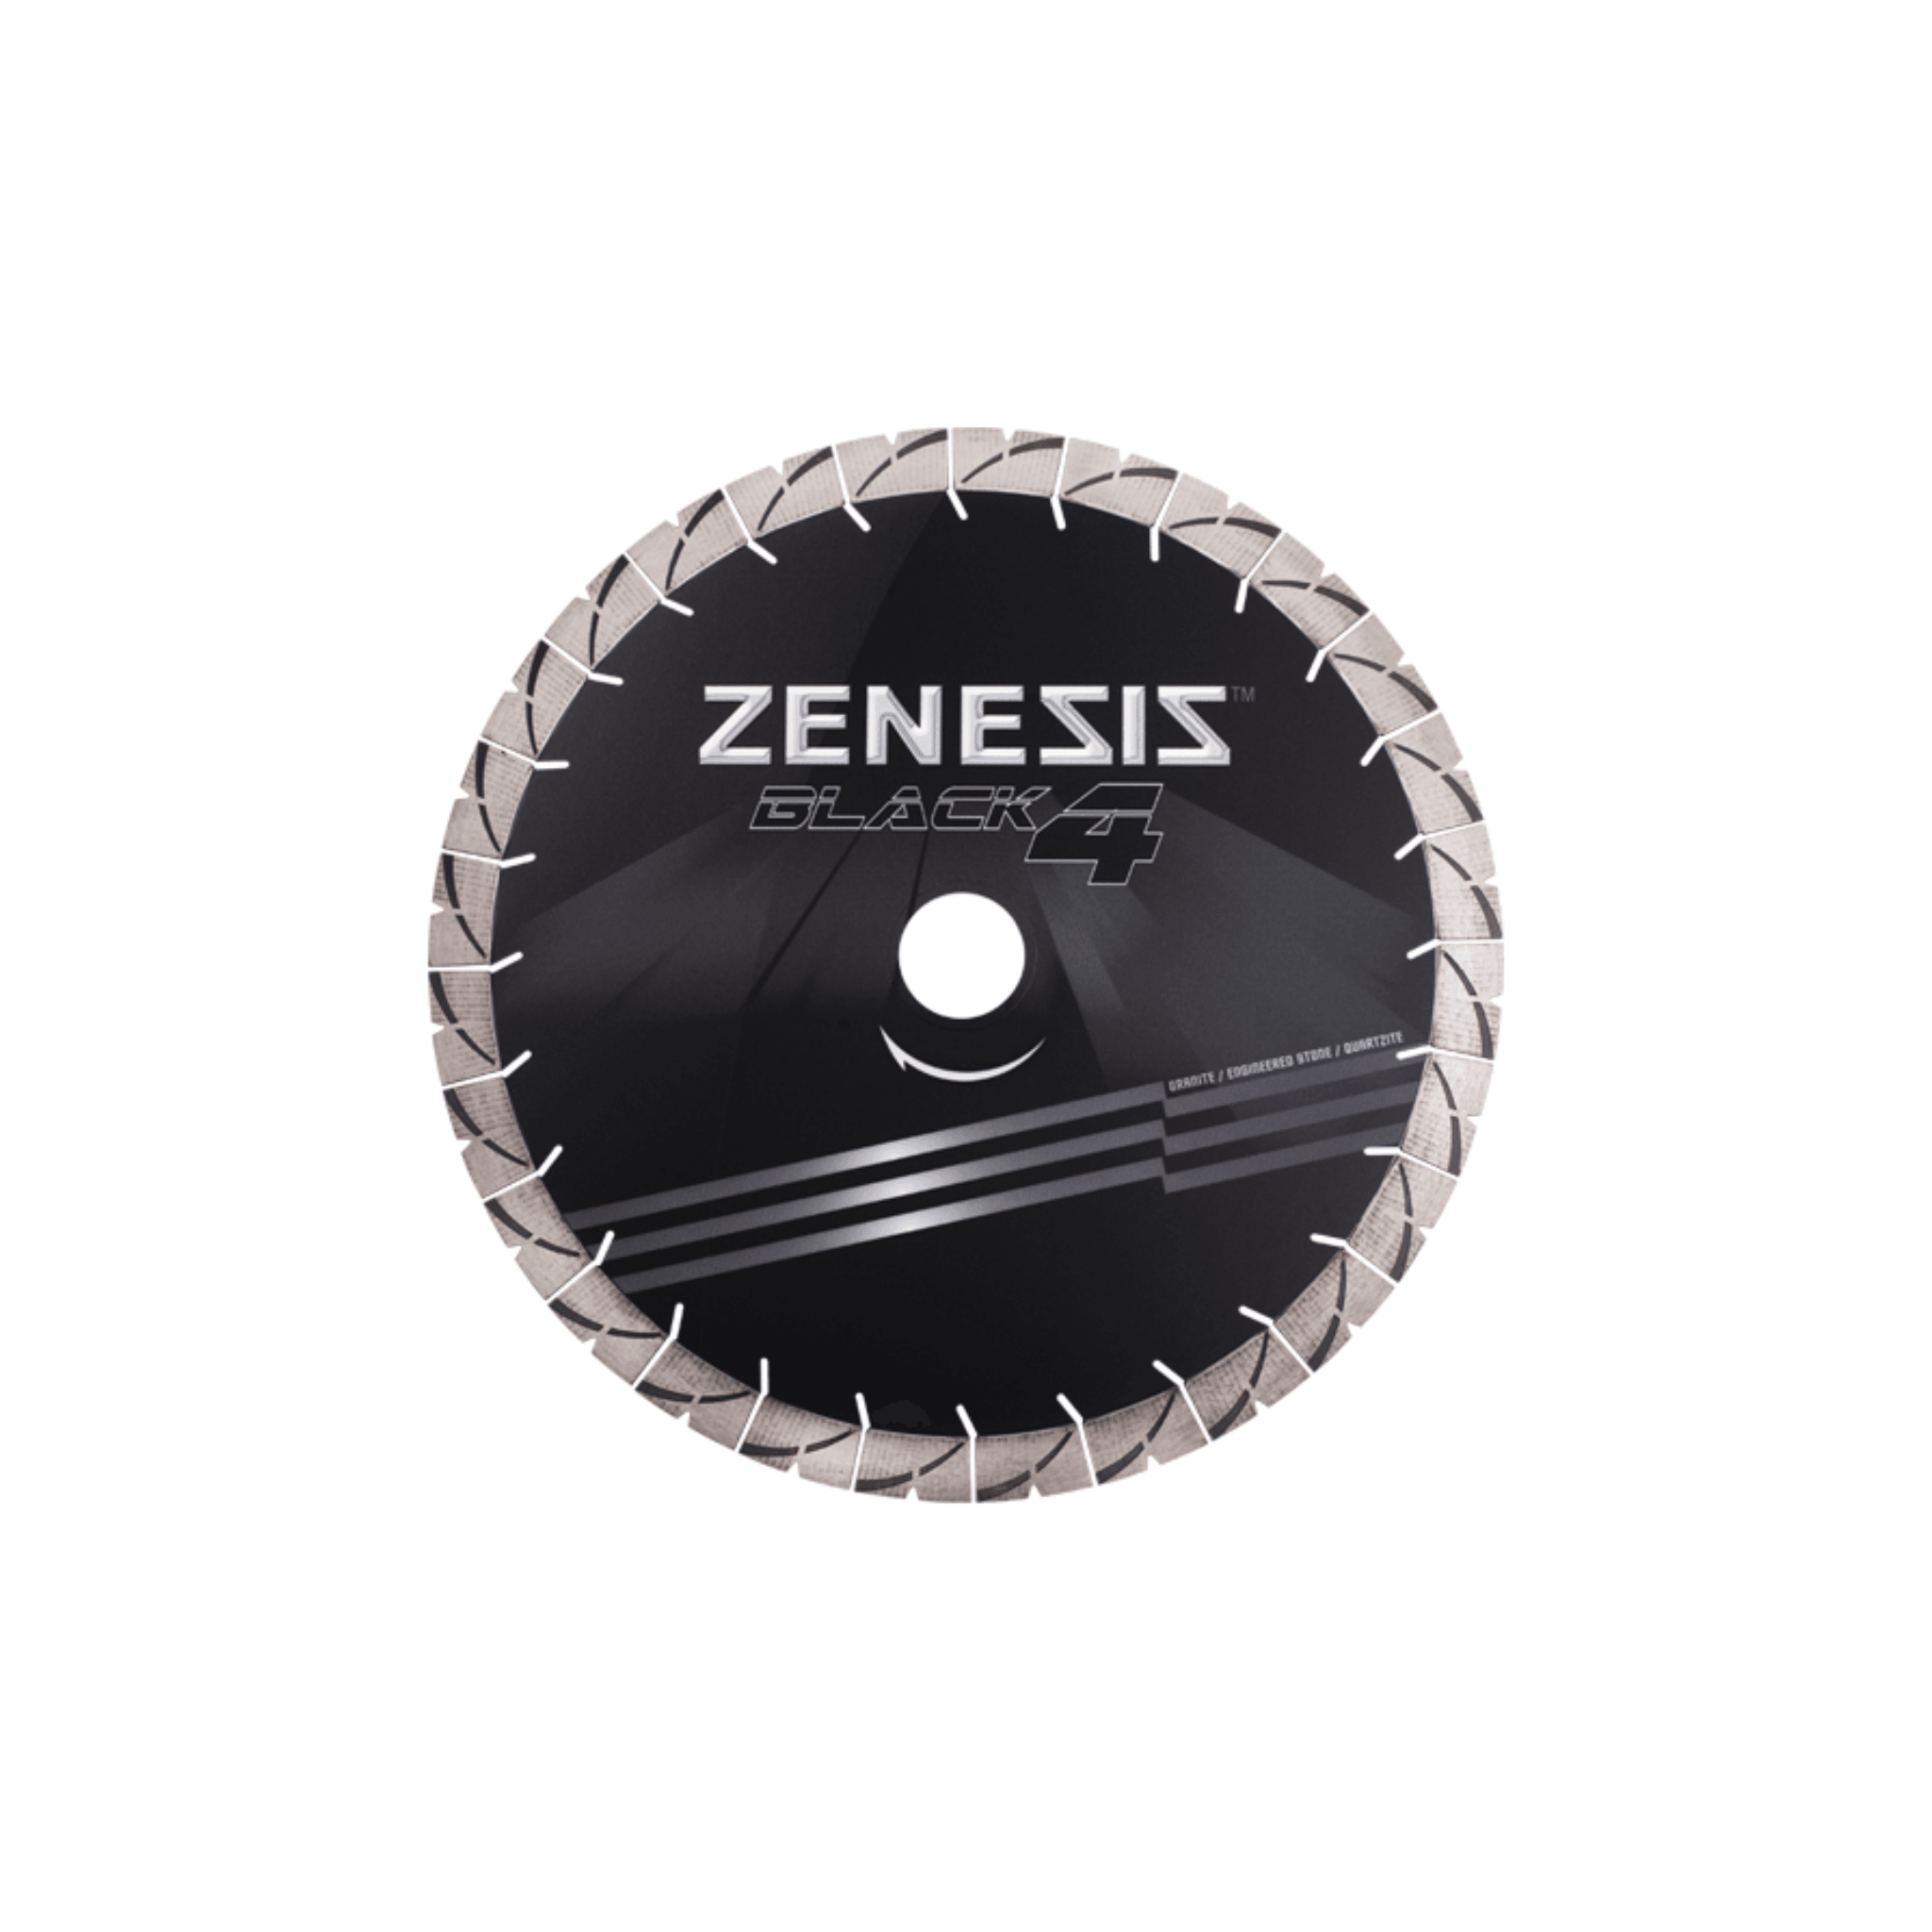 ZENESIS™ Black 4 Blade 14" - Direct Stone Tool Supply, Inc